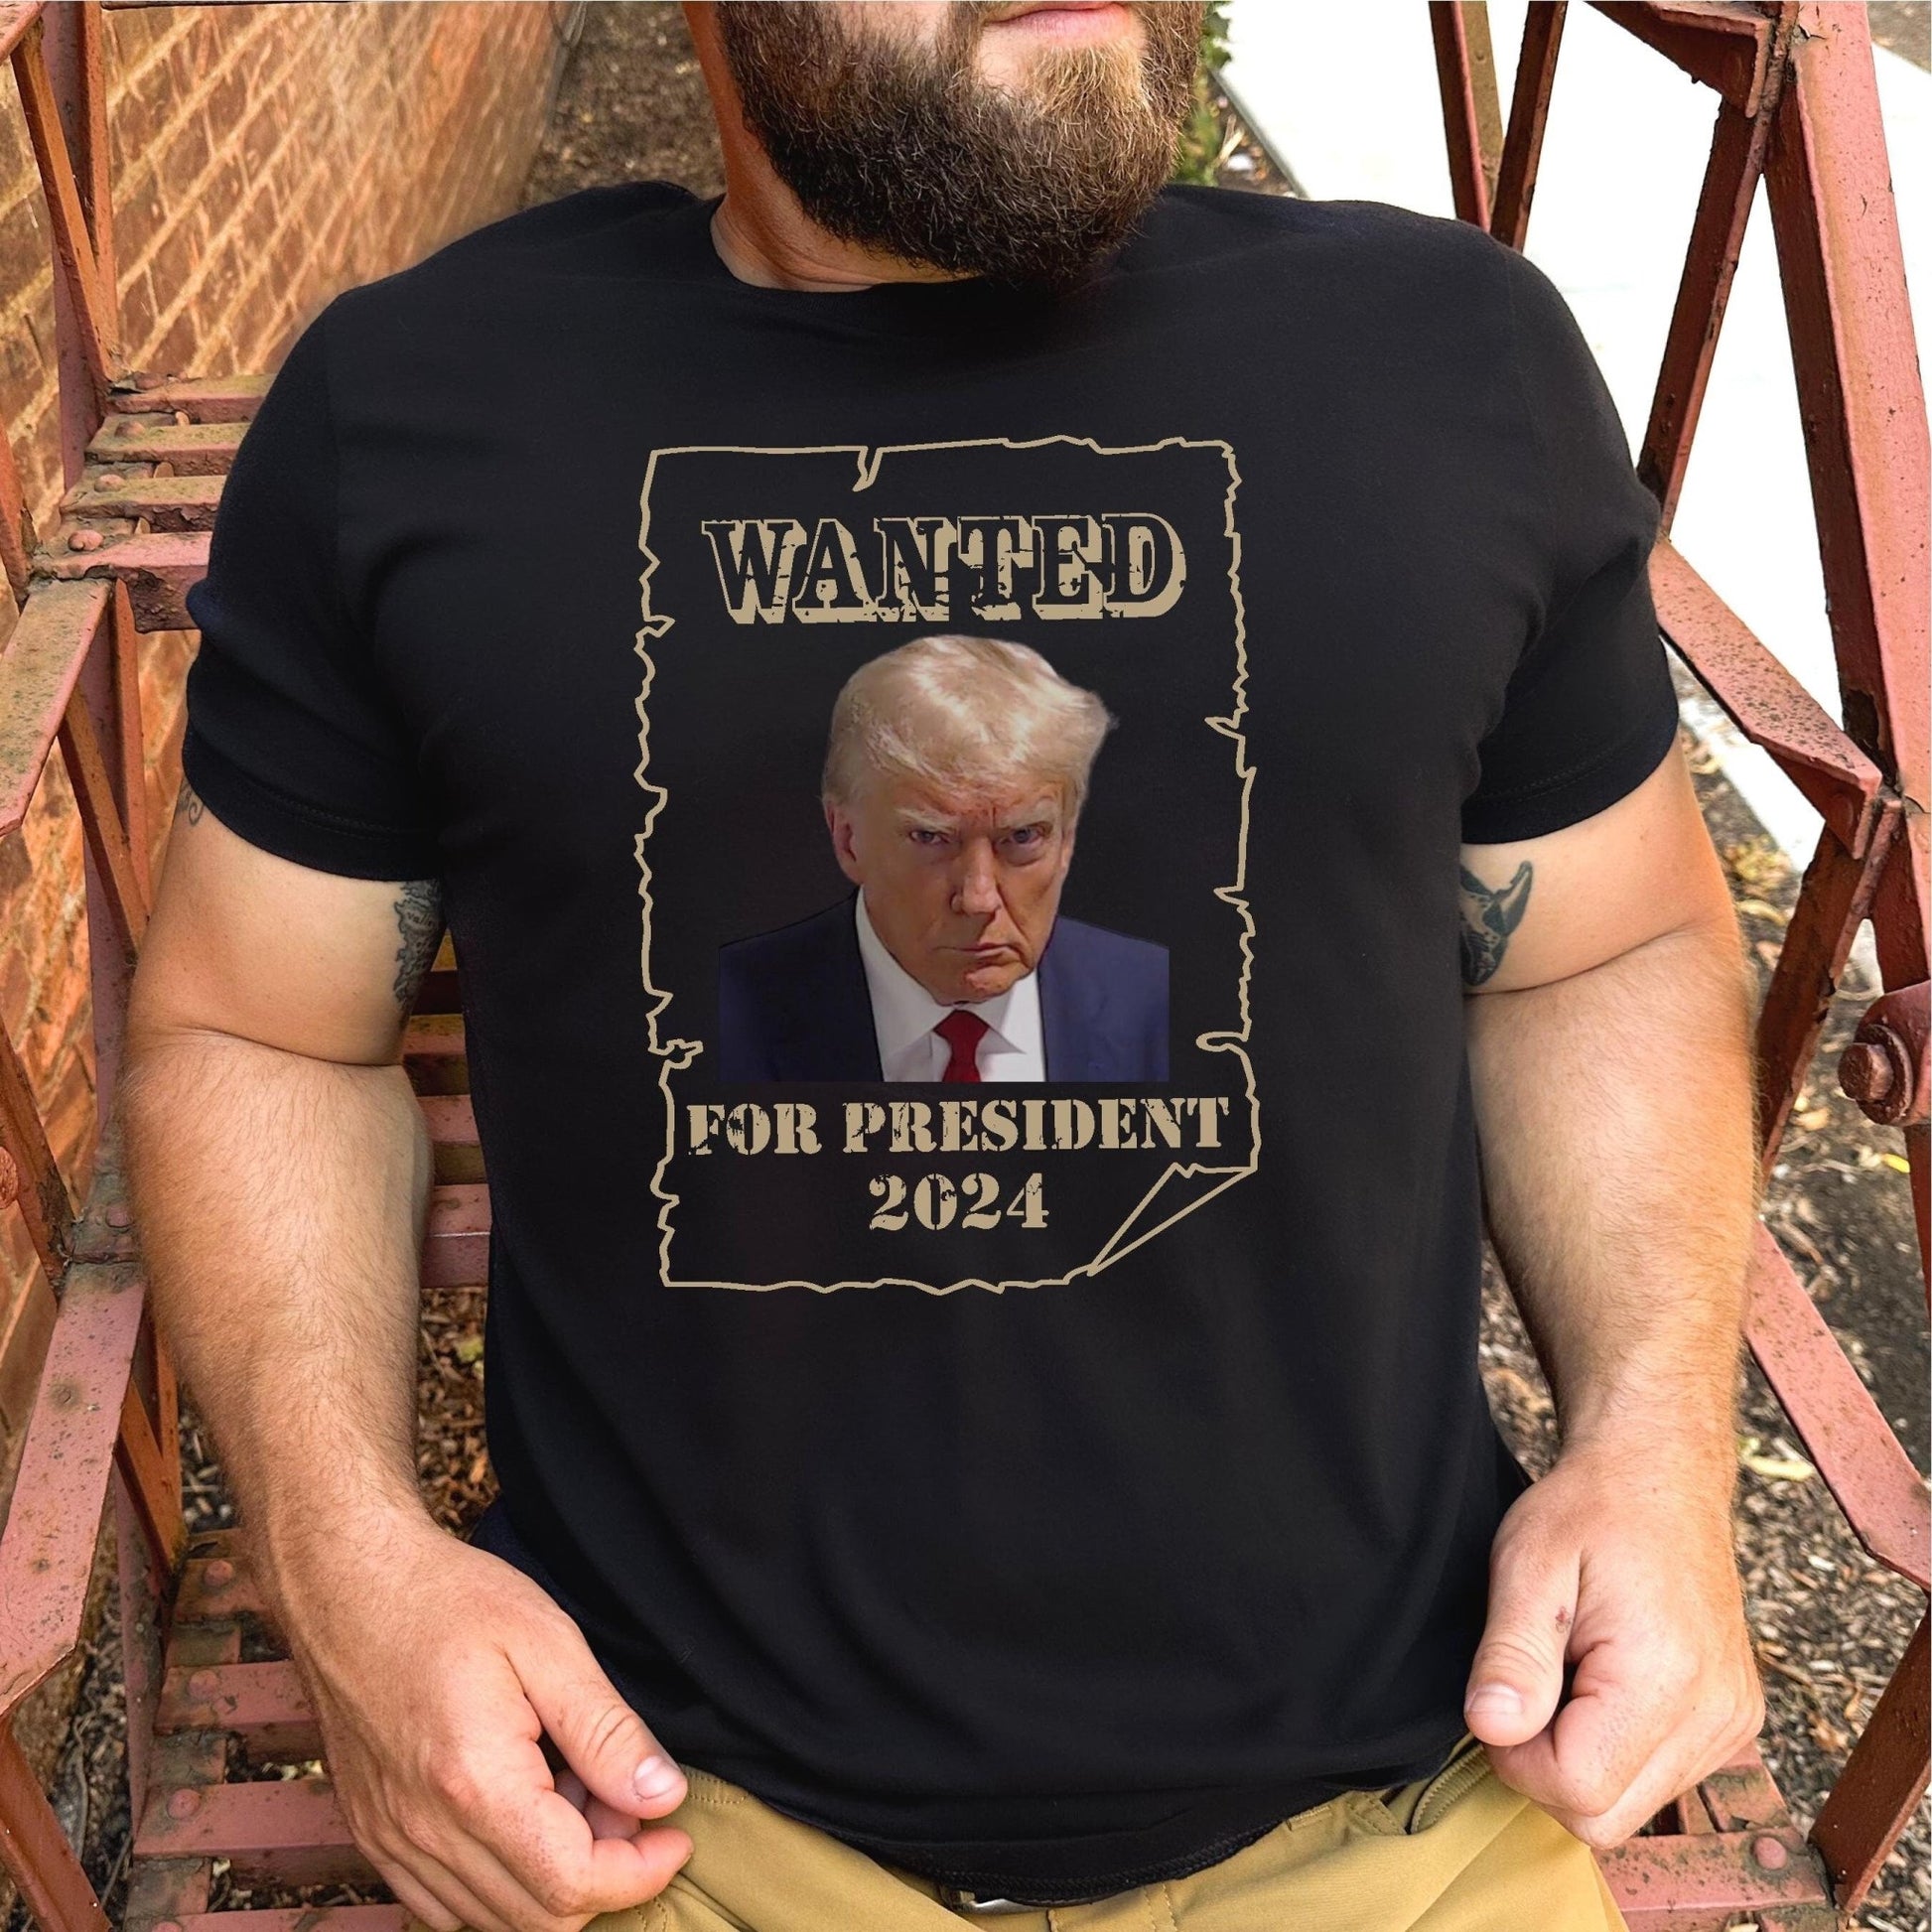 Trump Mug Shot Shirt, Trump for President 2024 t shirt funny tshirt trucker tee plus size dad boyfriend husband gift for her - SBS T Shop